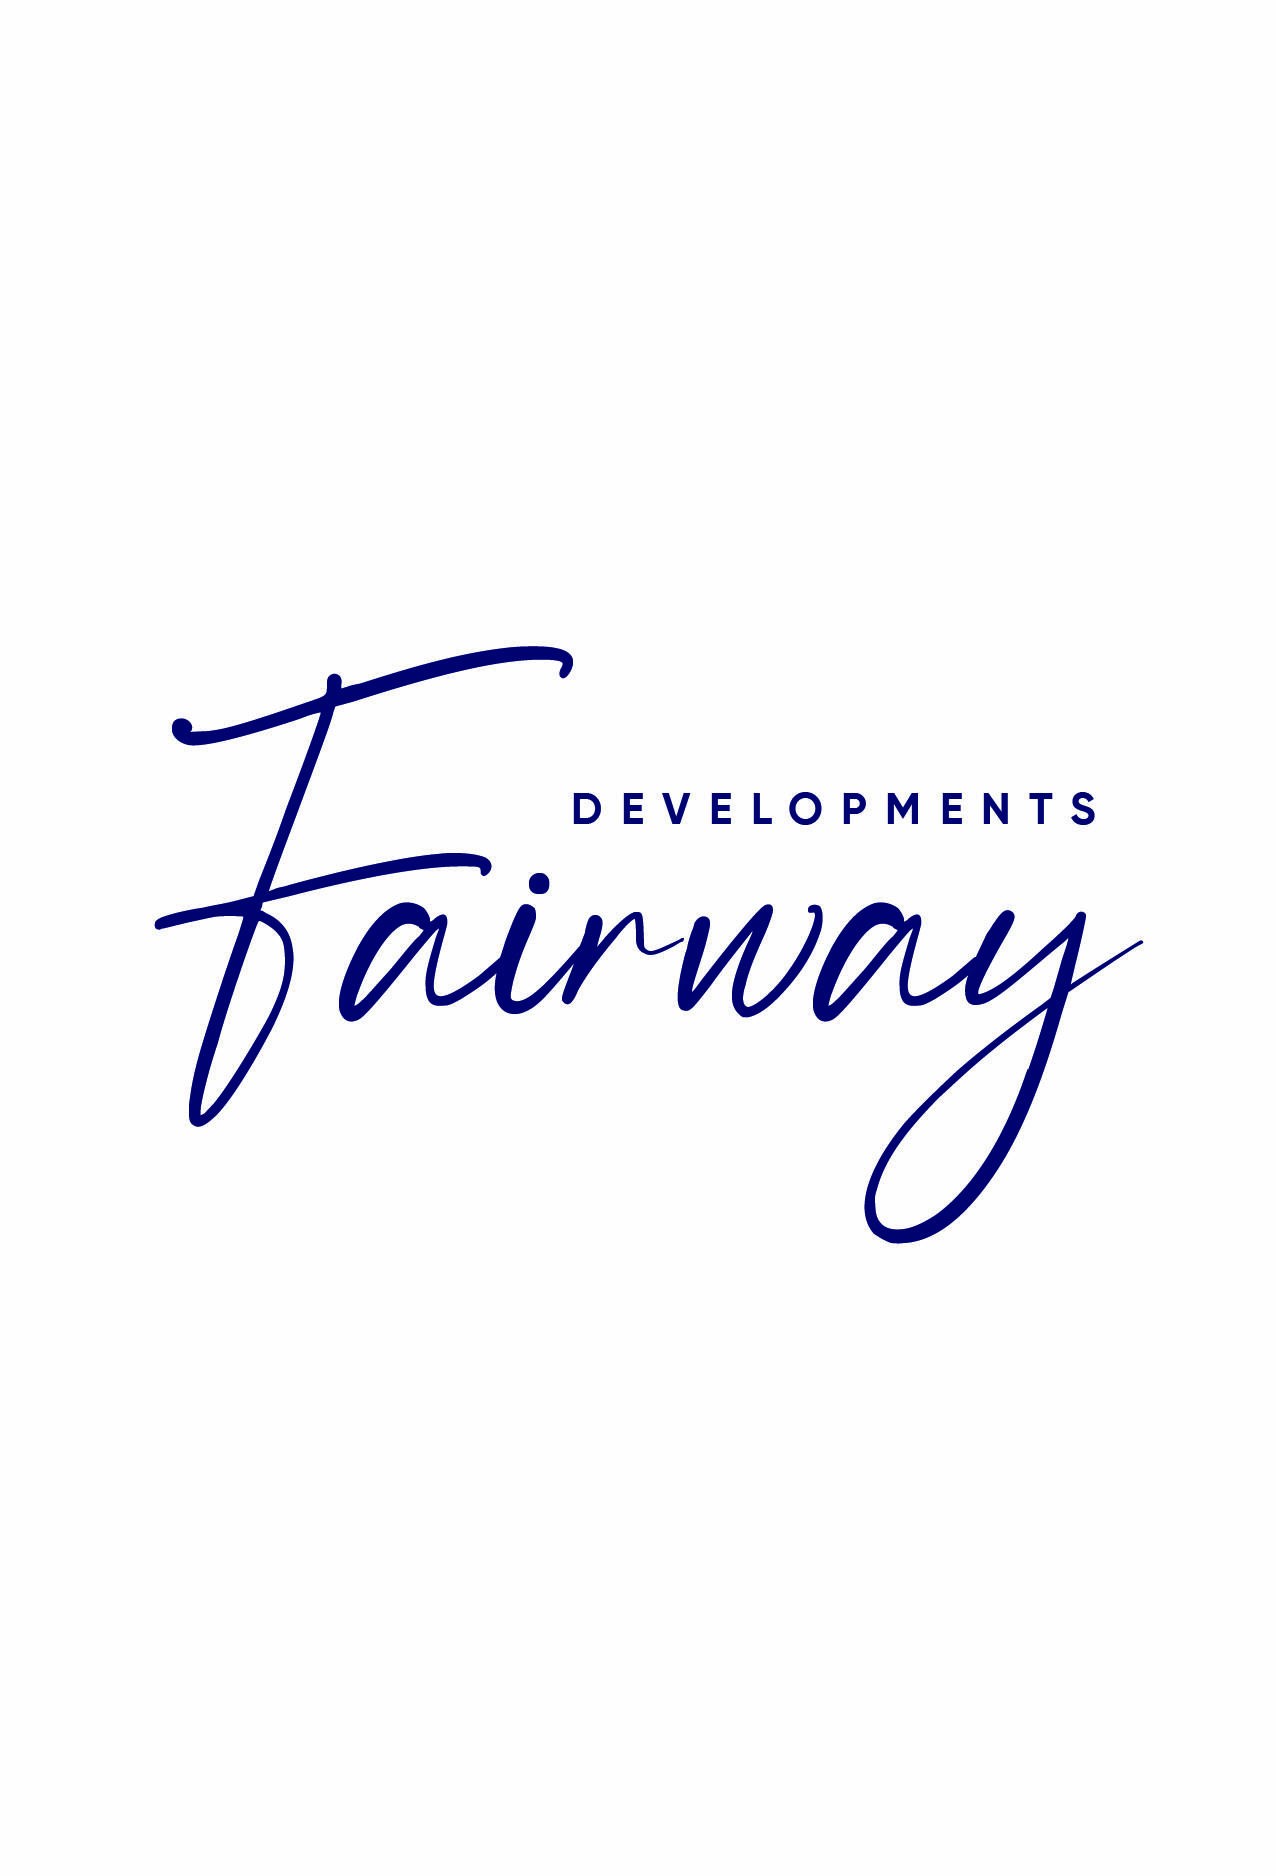 Fairway Developments